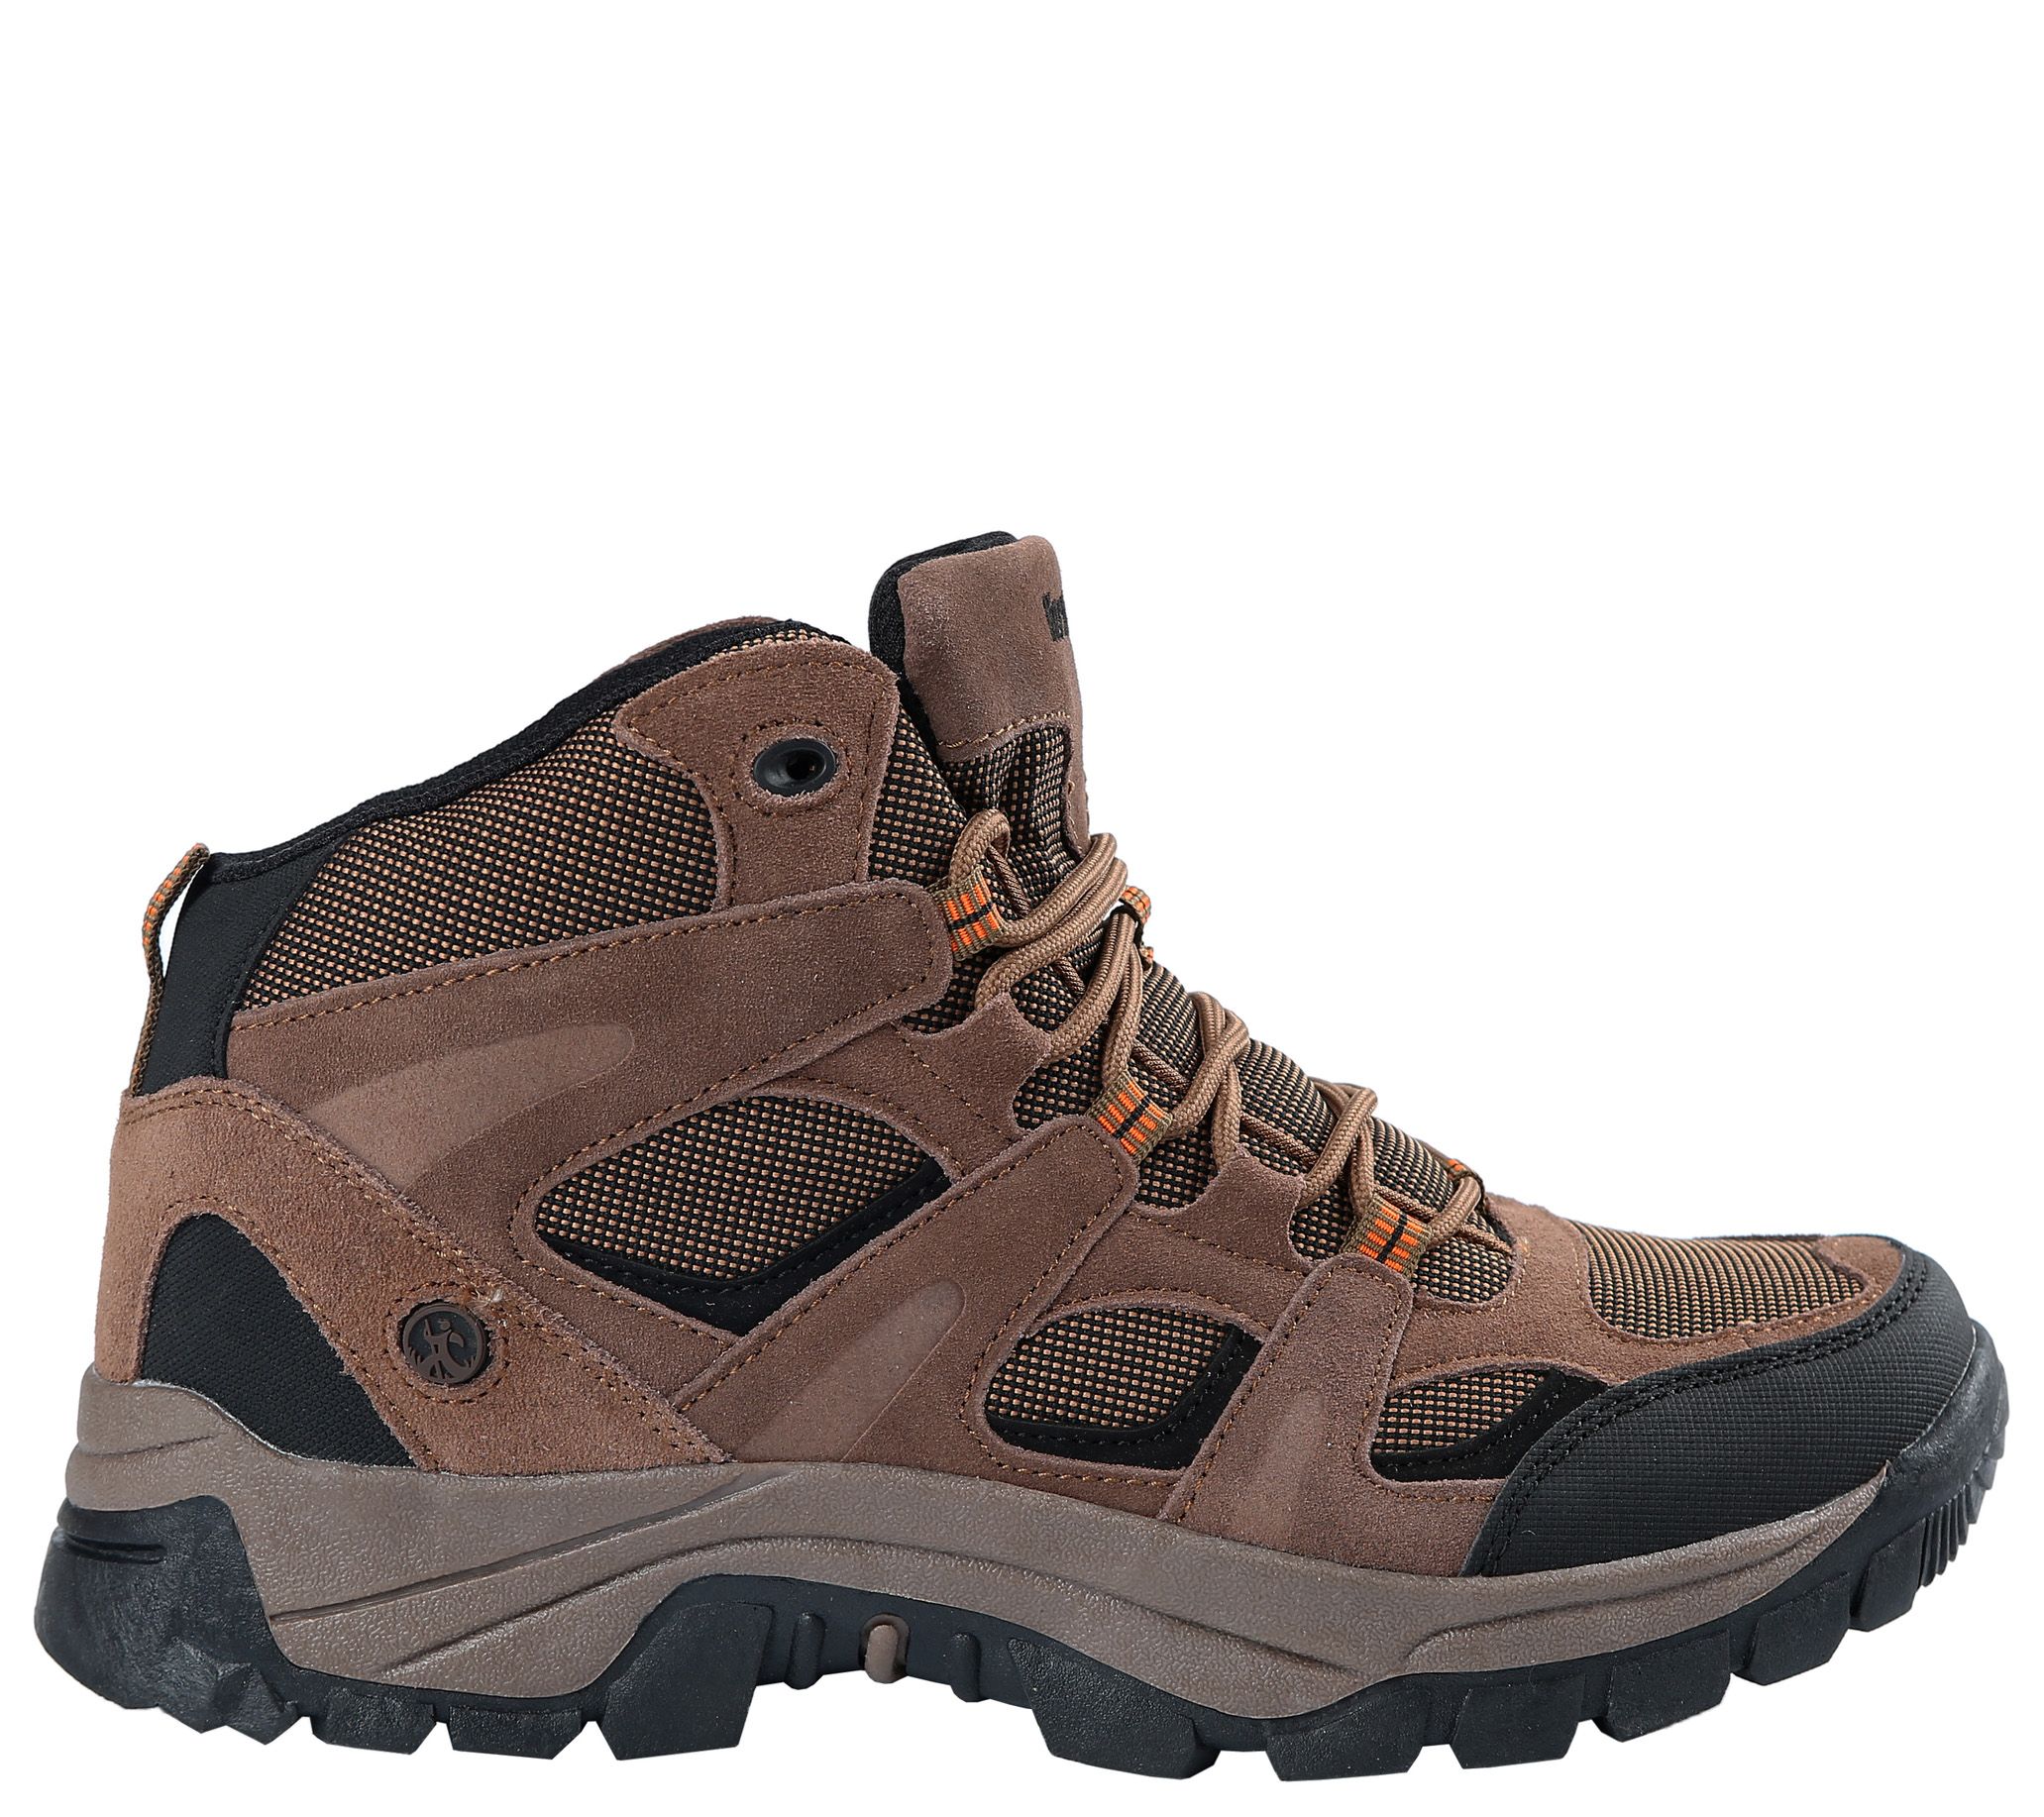 Northside Men's Hiking Boots - Monroe - QVC.com